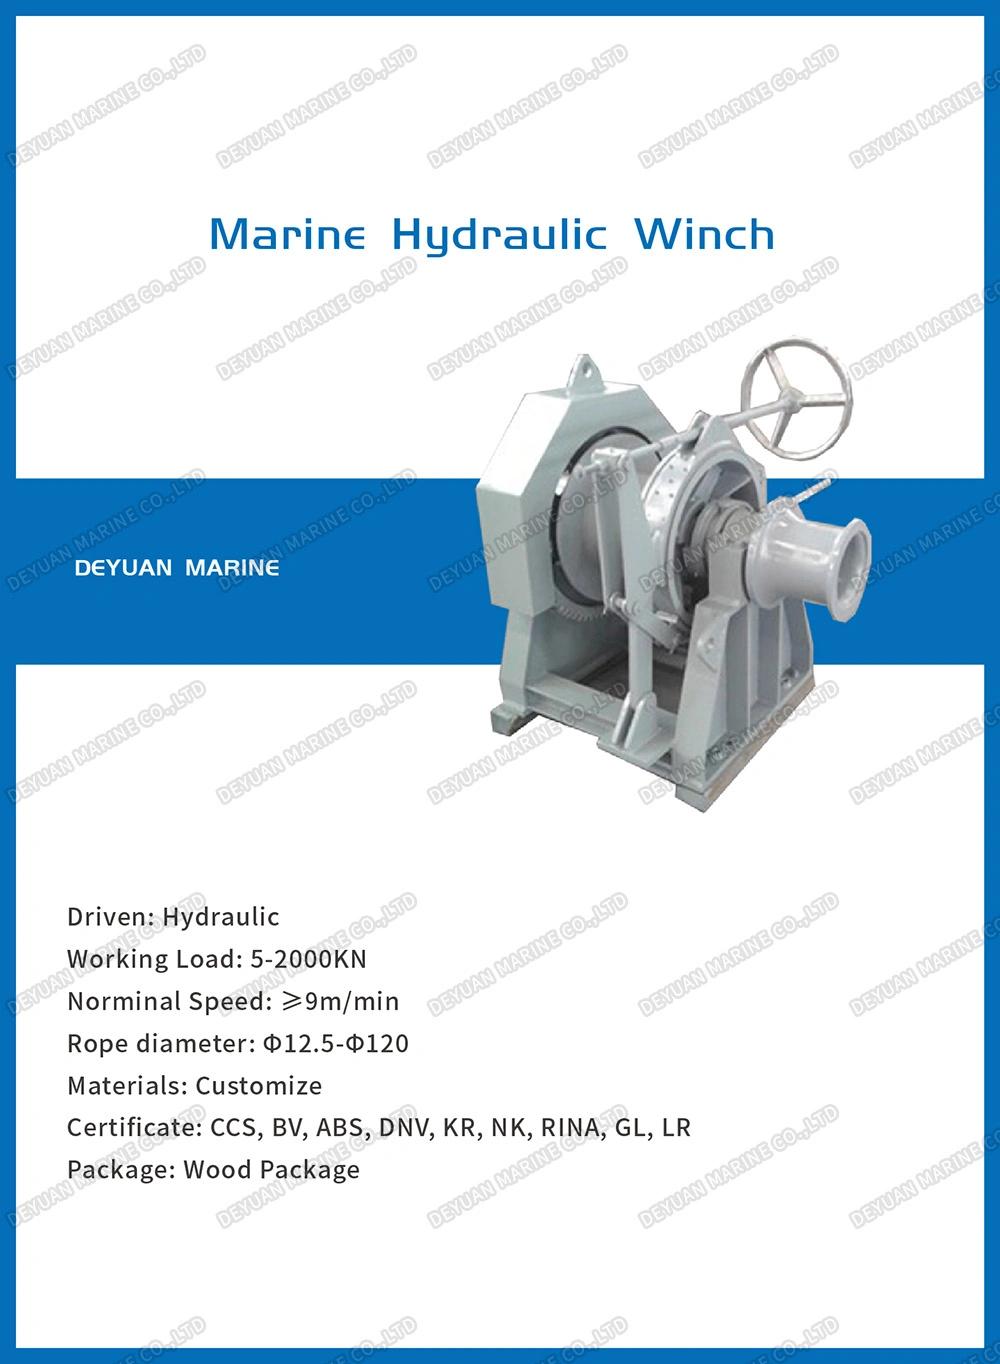 Hydraulic Double Drum Marine Winch